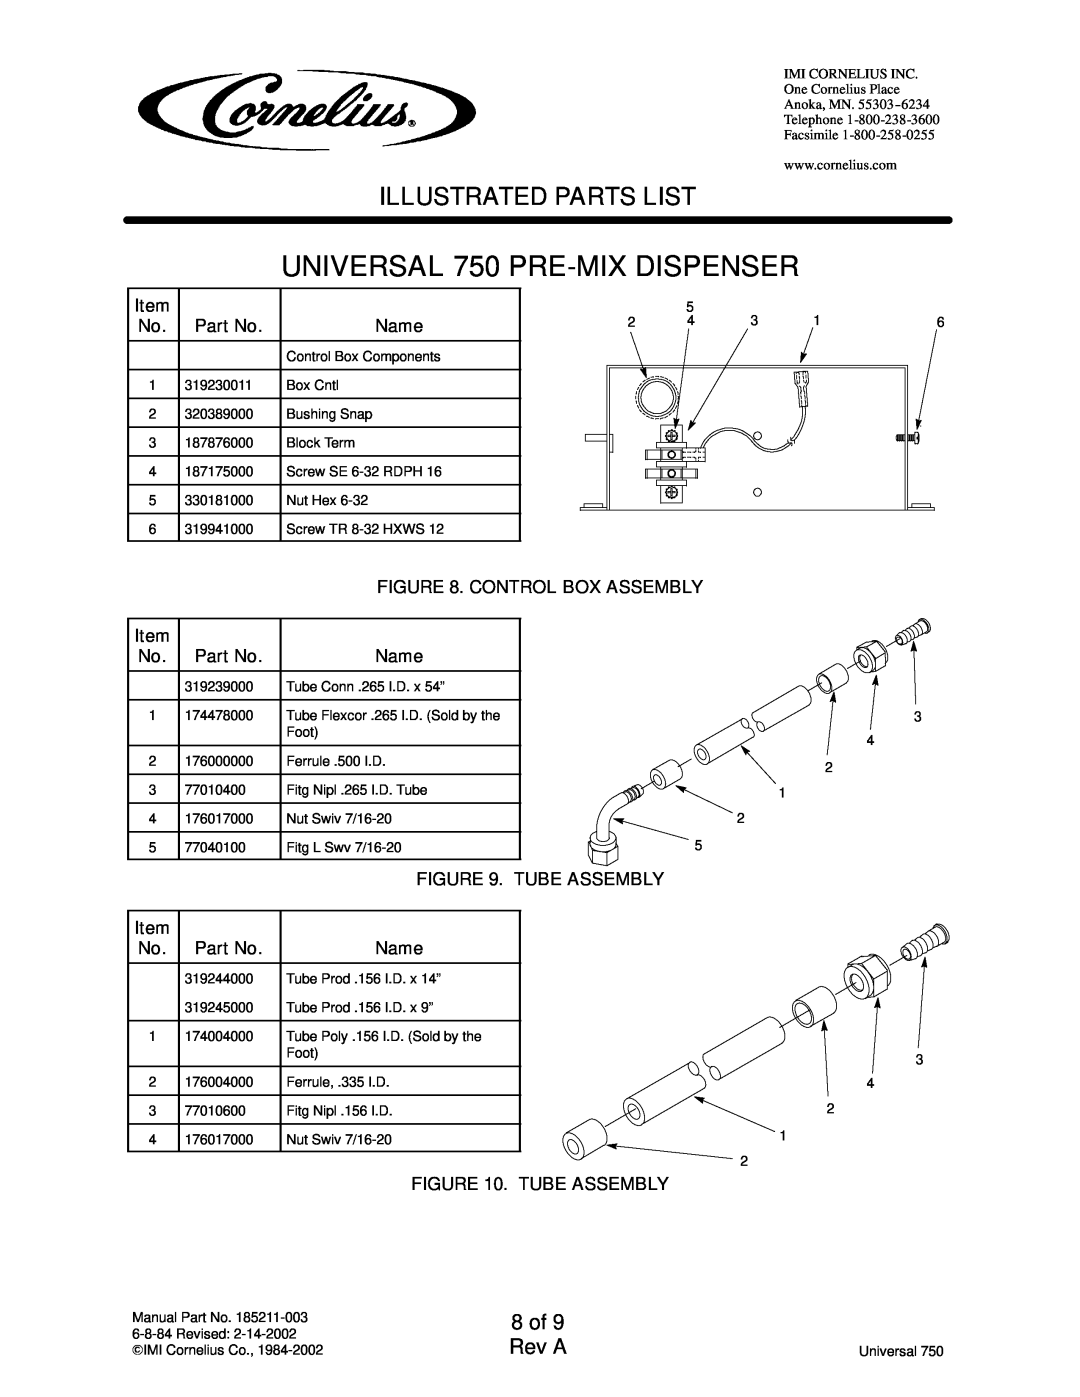 Cornelius 2849959xxx, 2849949xxx manual 8 of 9 Rev A, UNIVERSAL 750 PRE-MIXDISPENSER, Illustrated Parts List 